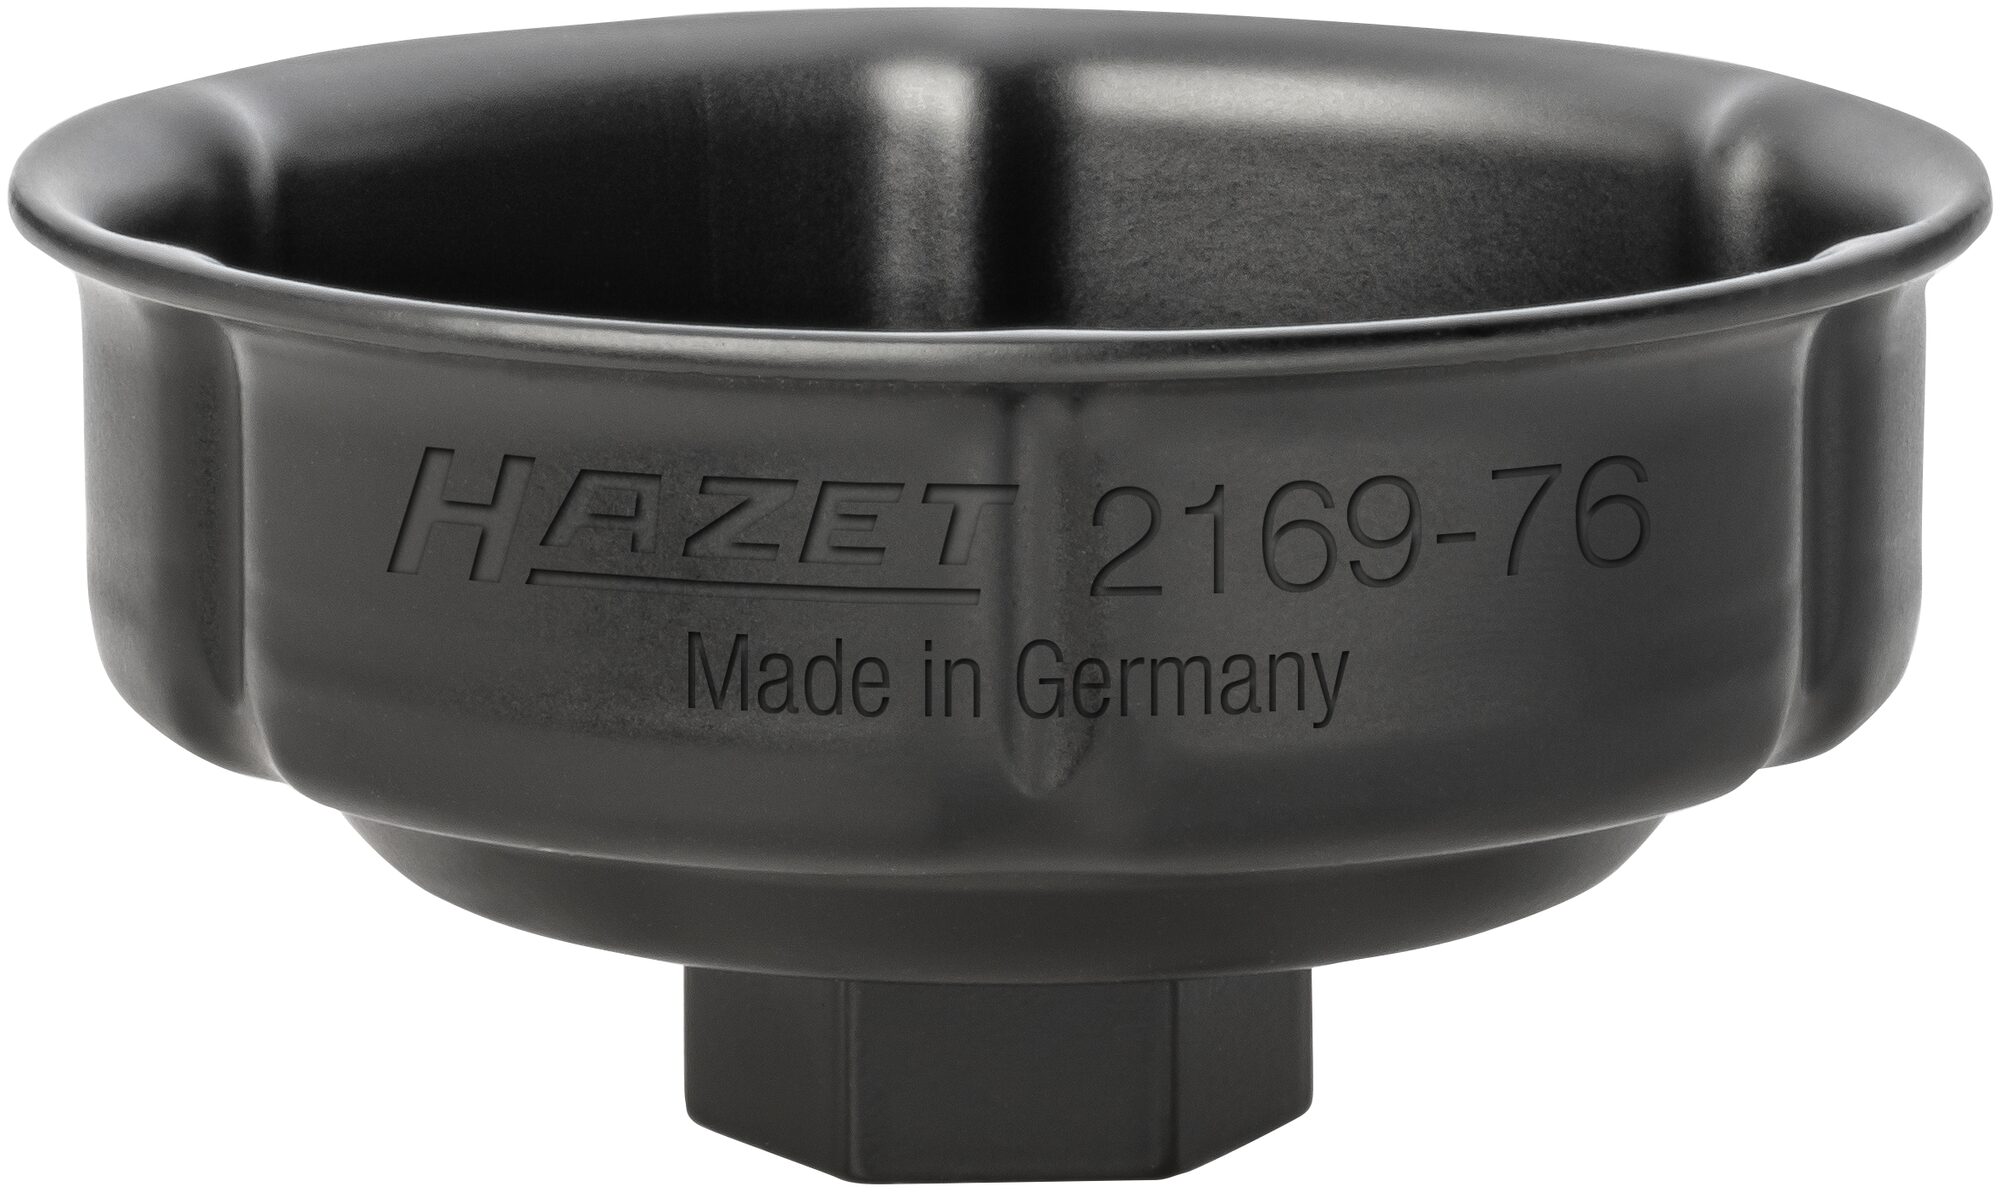 HAZET Ölfilter-Schlüssel 2169-76 · Vierkant hohl 12,5 mm (1/2 Zoll) · Rillenprofil · 85 mm